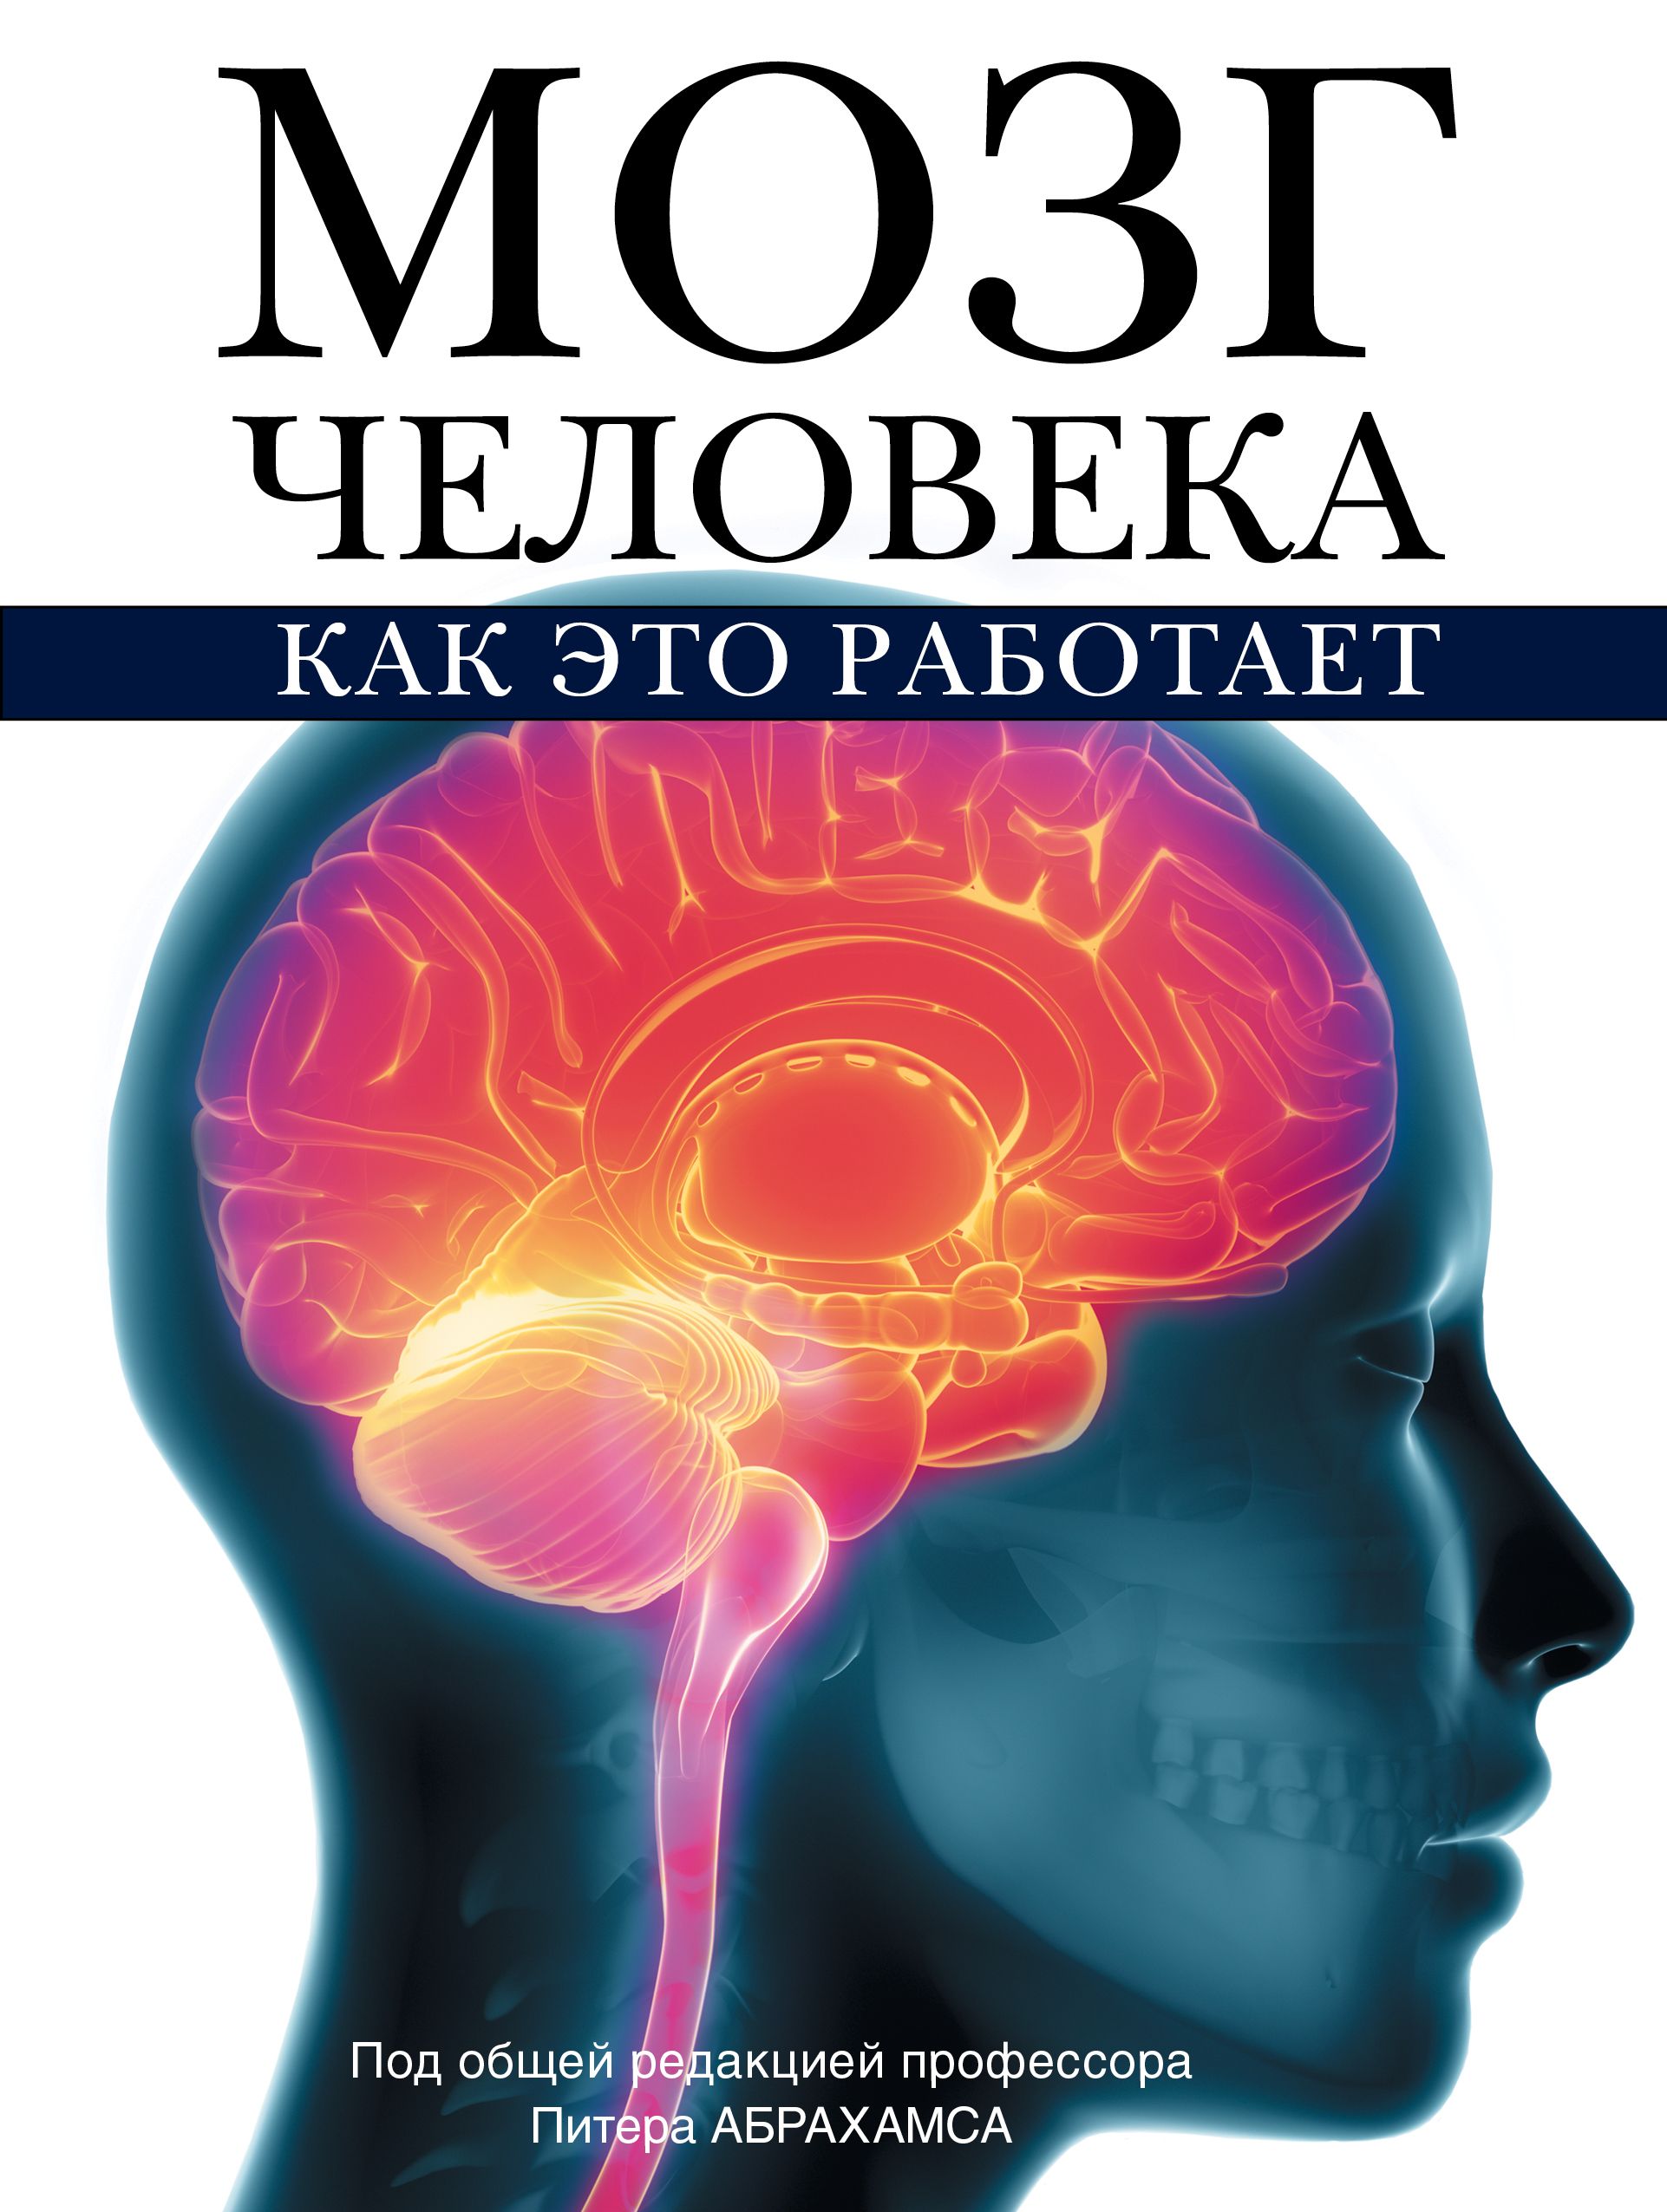 O brain. Книга мозг. Книга про мозг человека. Мозг с книжкой.